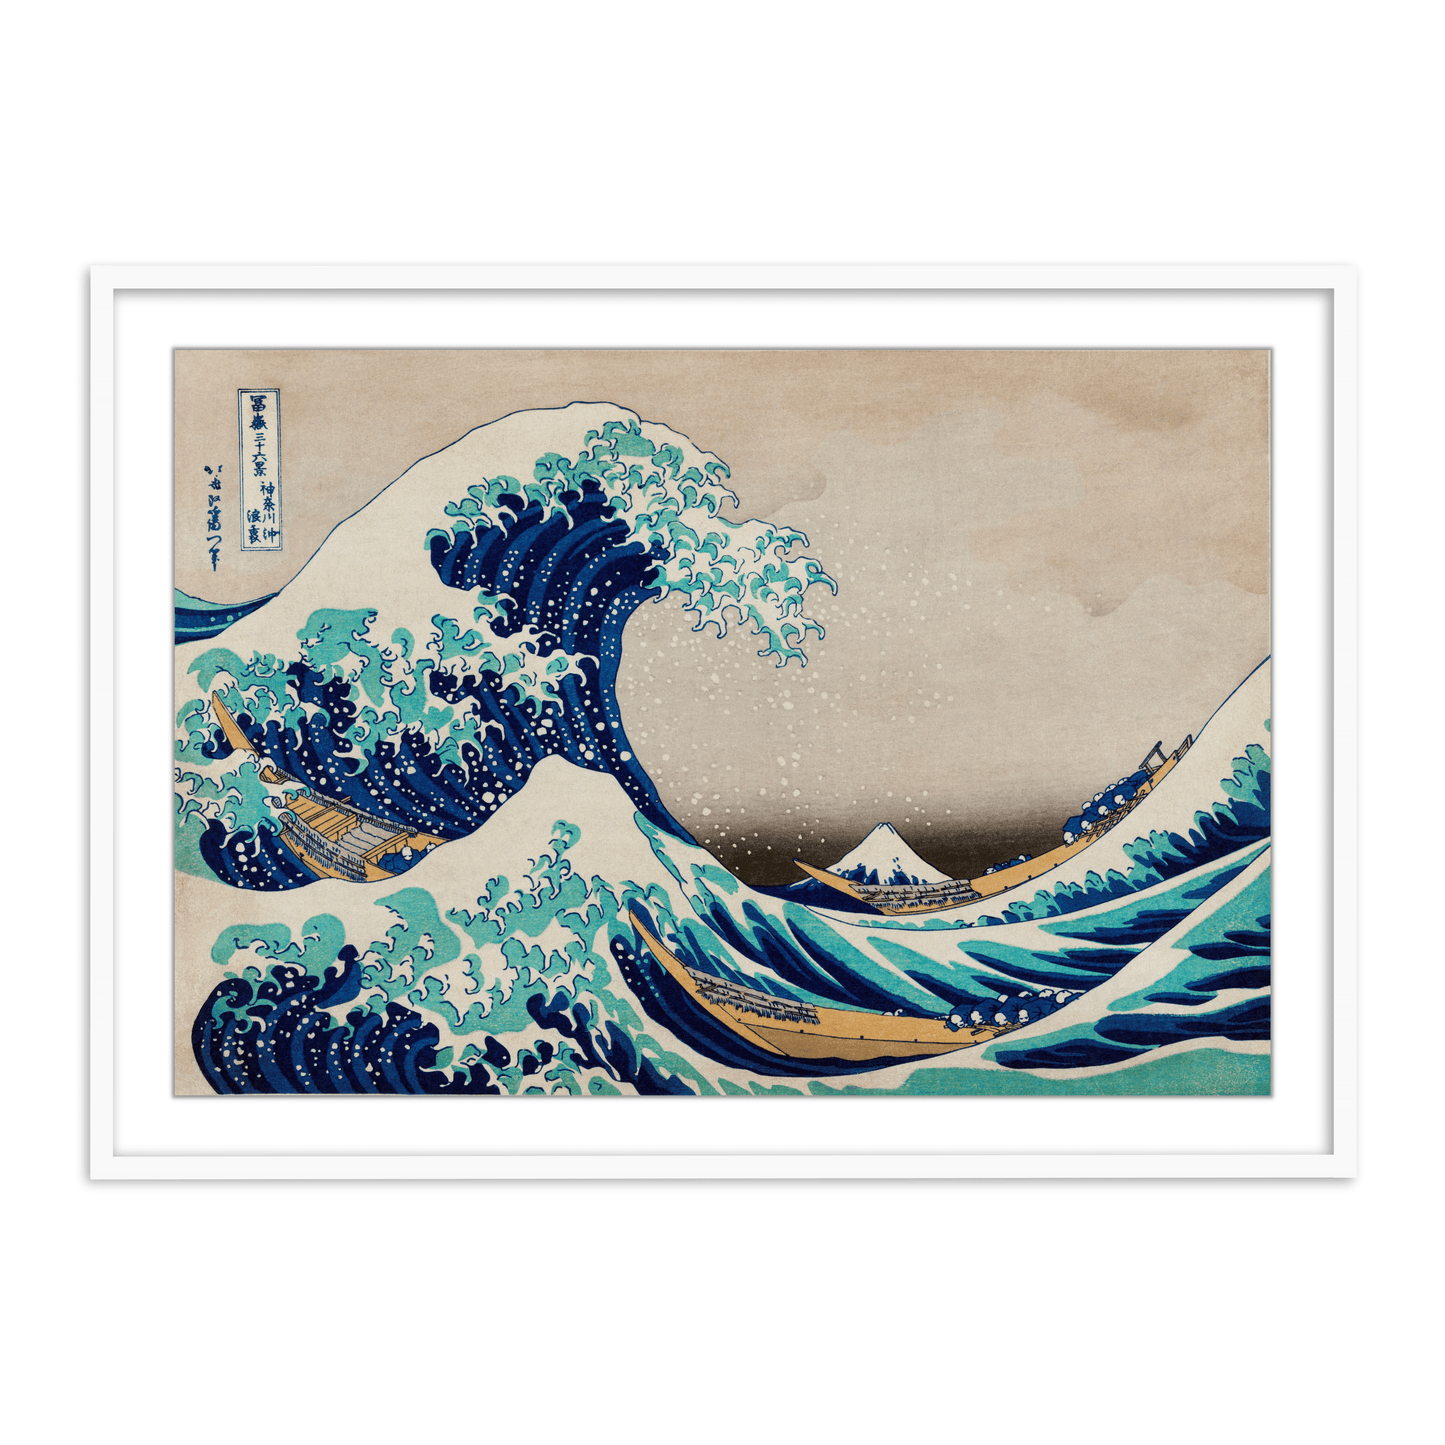 The Great Wave off Kanagawa vintage illustration by Katsushika Hokusai